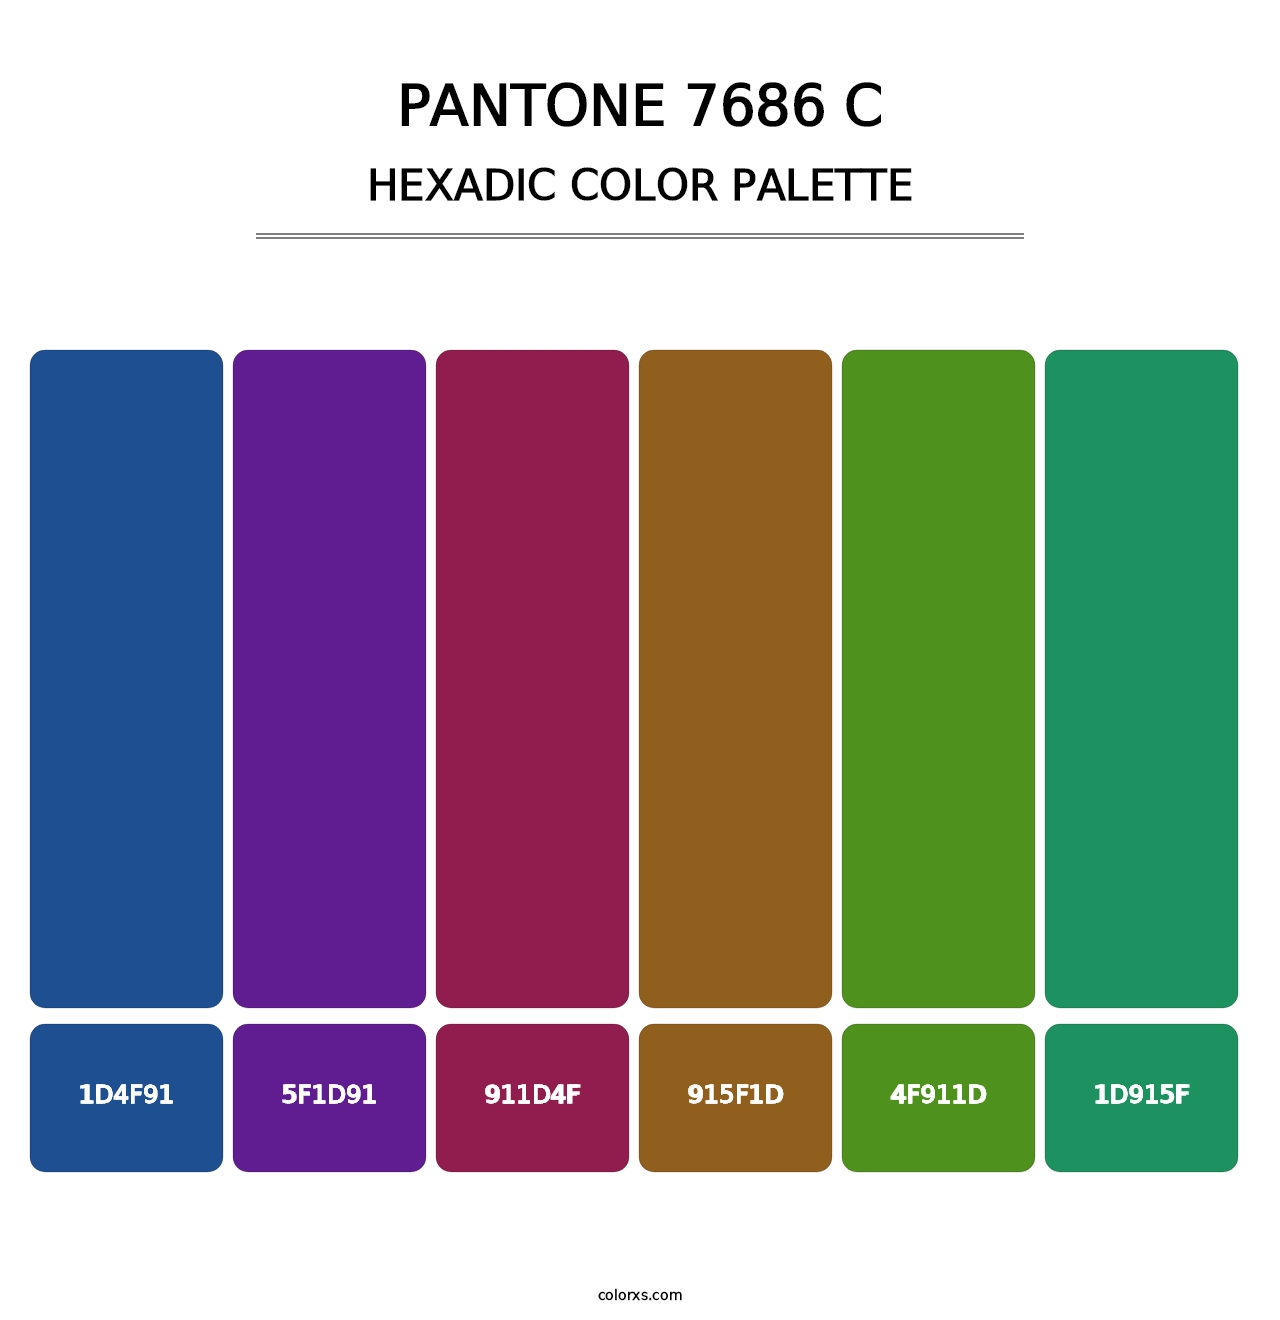 PANTONE 7686 C - Hexadic Color Palette